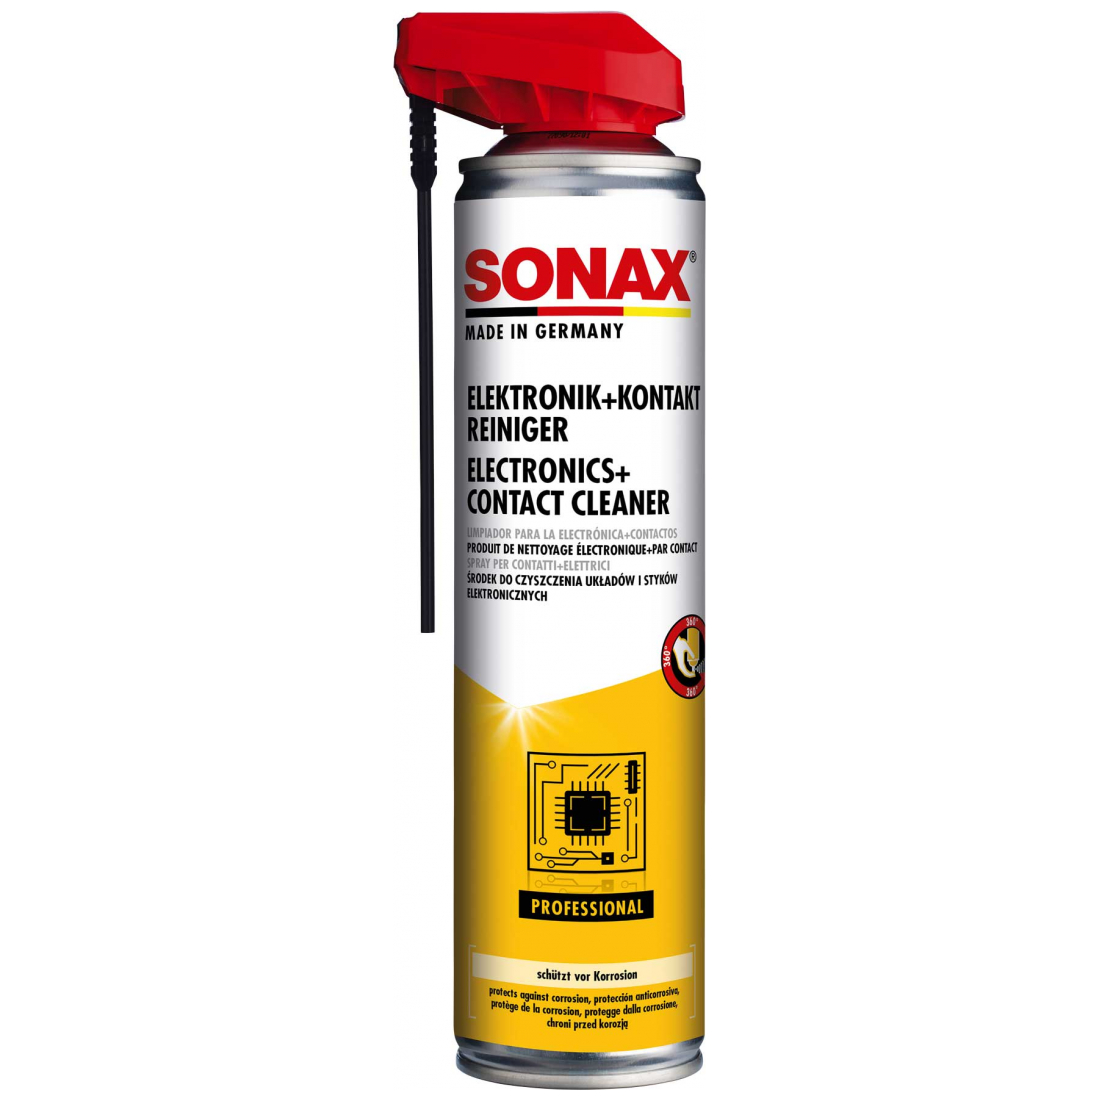 SONAX Elektronik + Kontakt Reiniger EasySpray 400ml 04603000, 3x